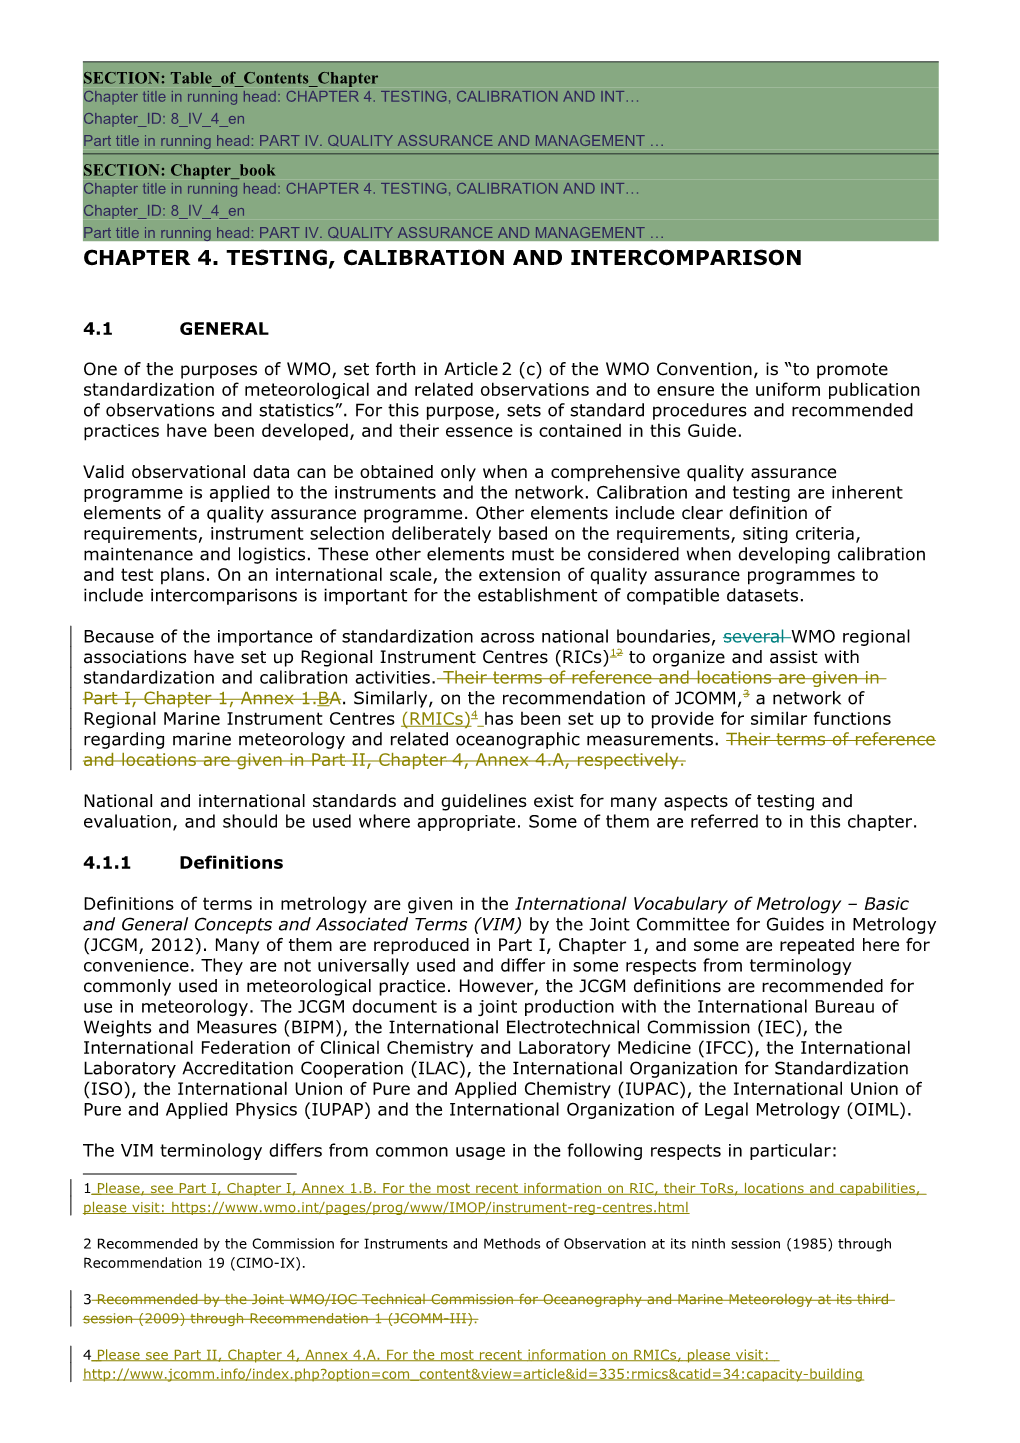 Chapter 4. Testing, Calibration and Intercomparison1